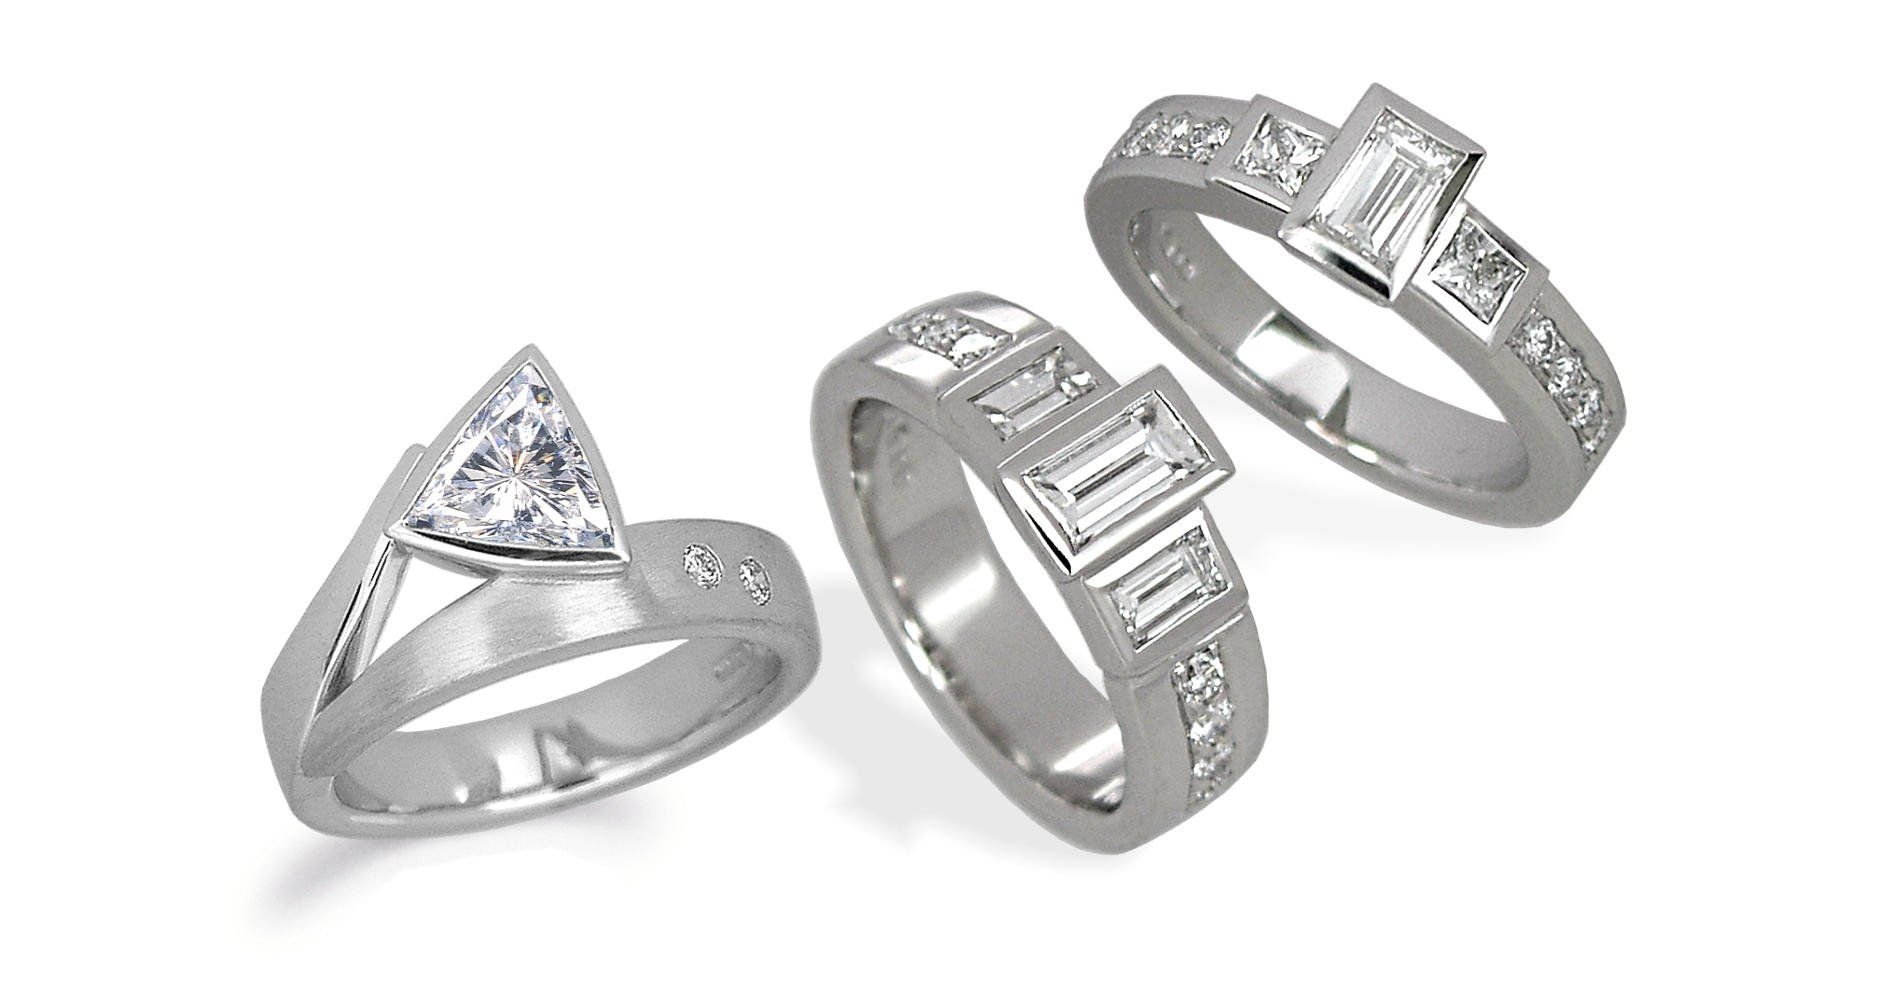 bespoke contemporary wedding rings